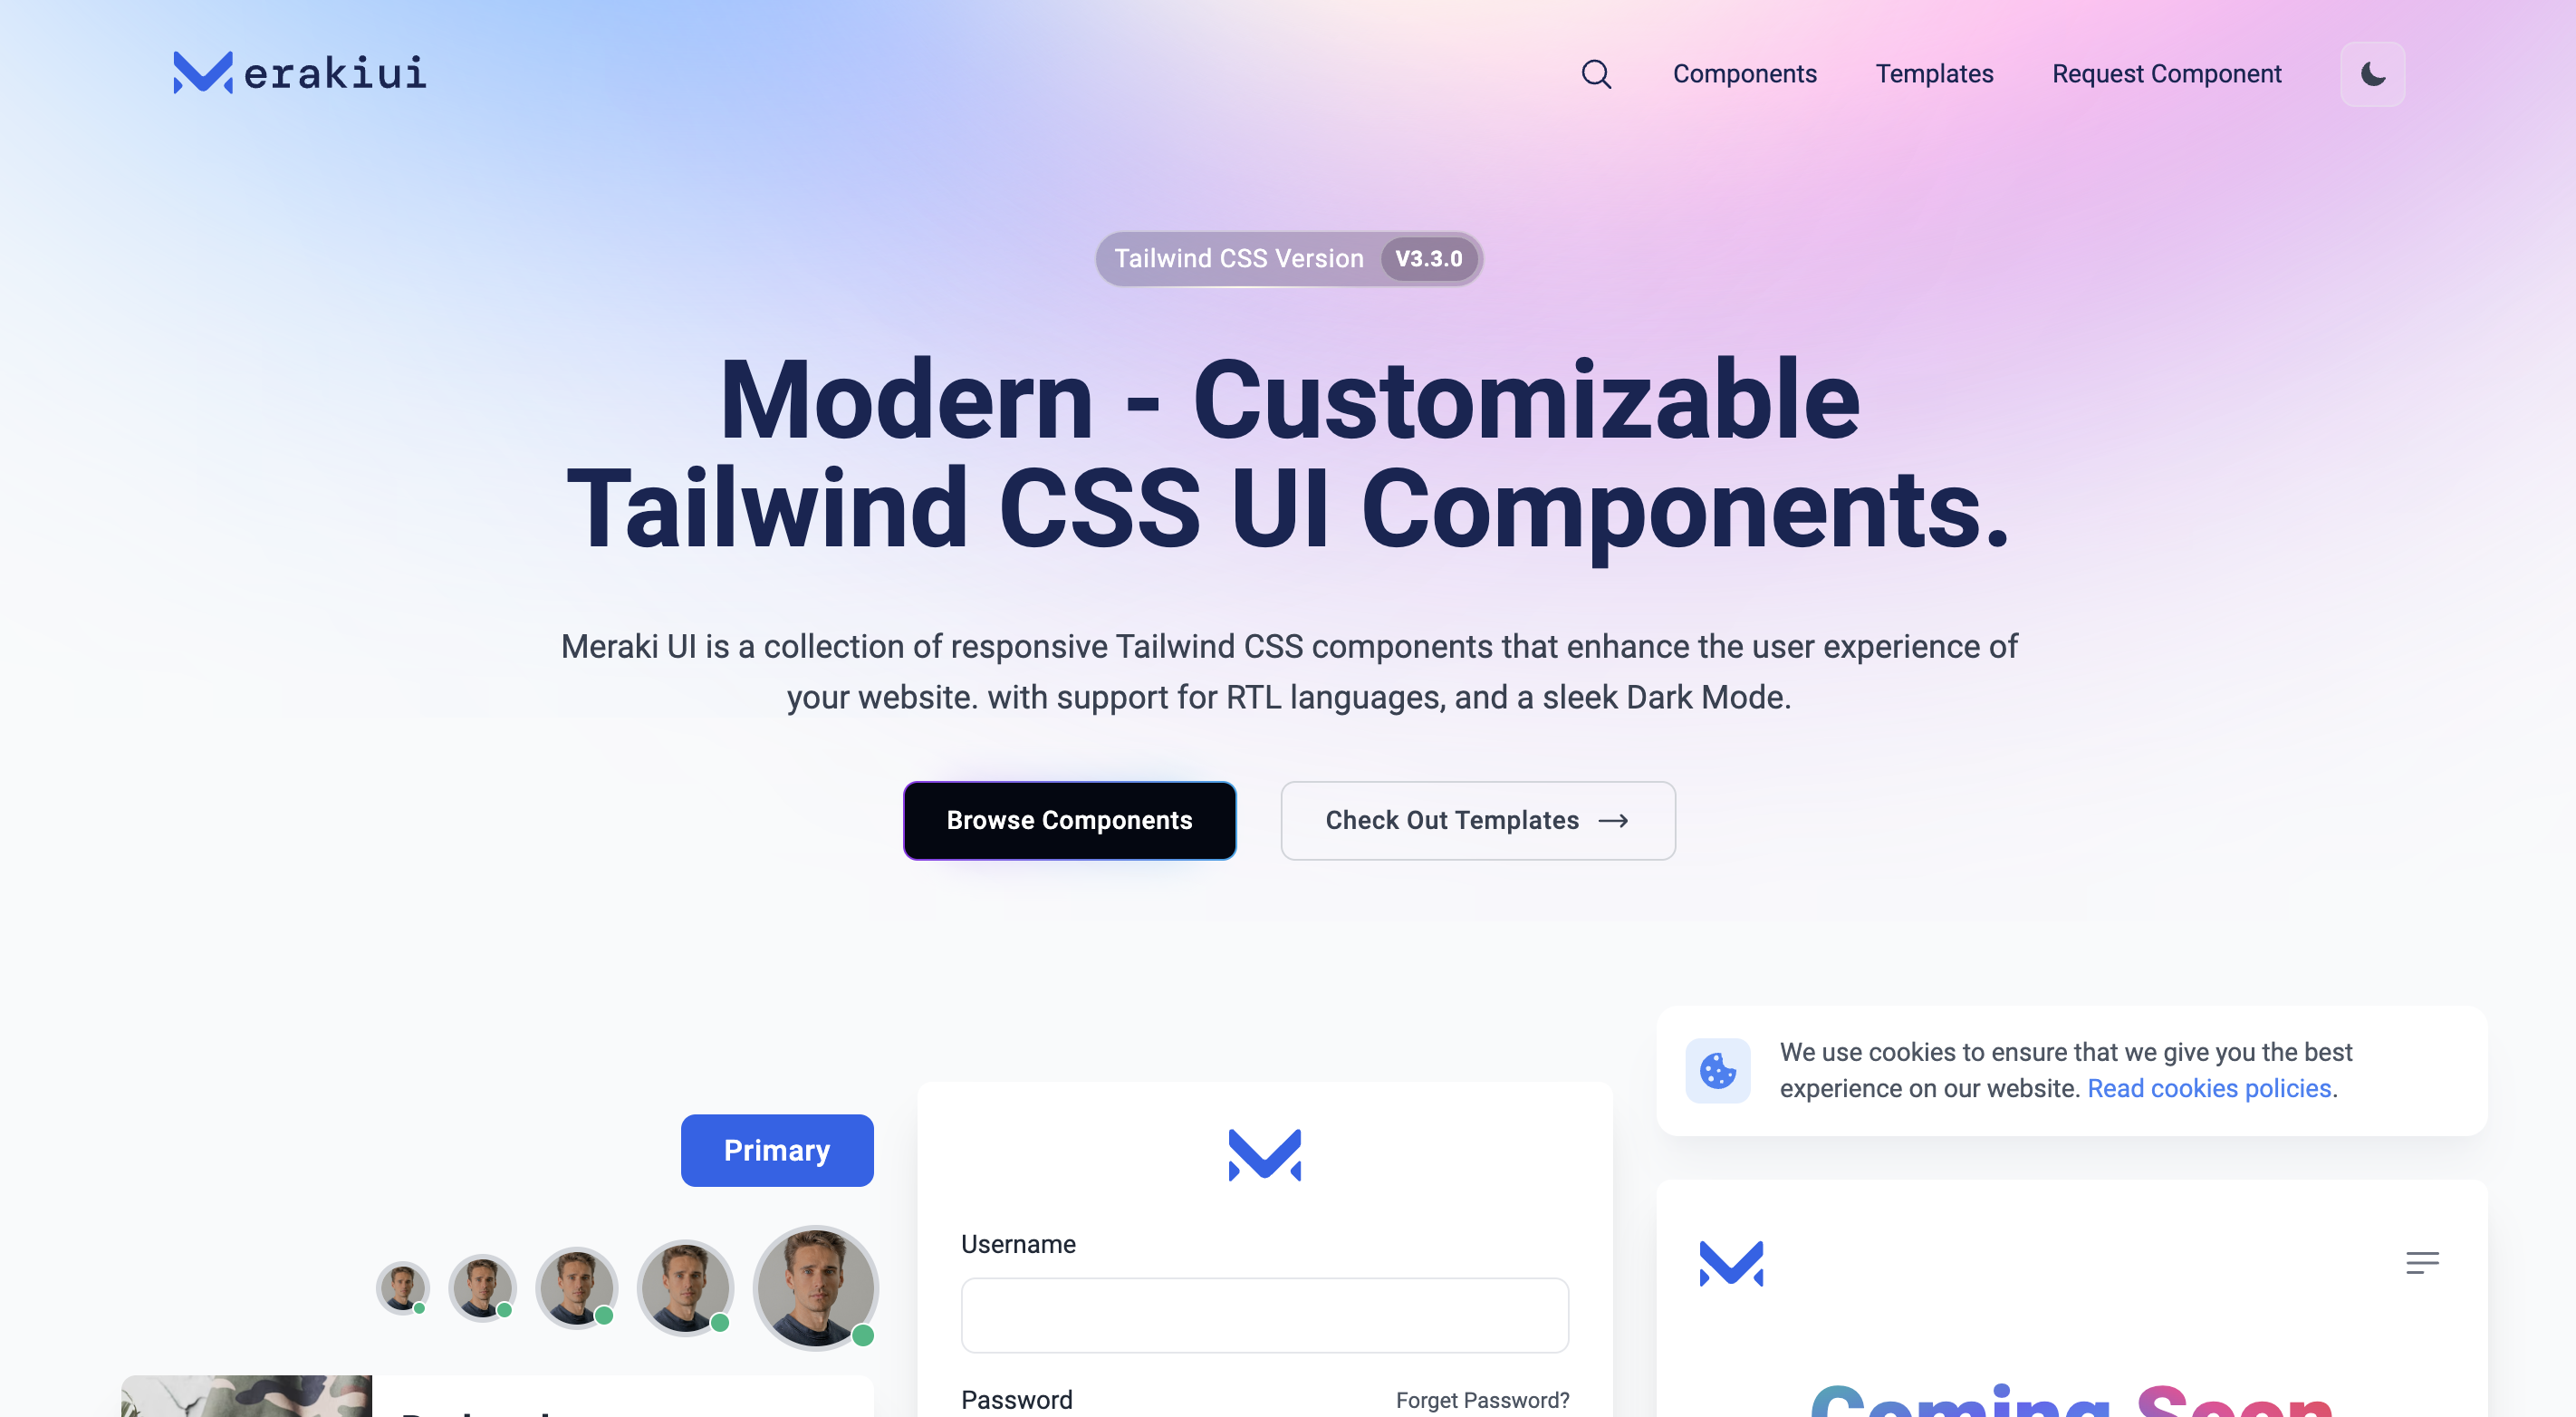 Meraki UI Tailwind CSS Components 1 of 1 images